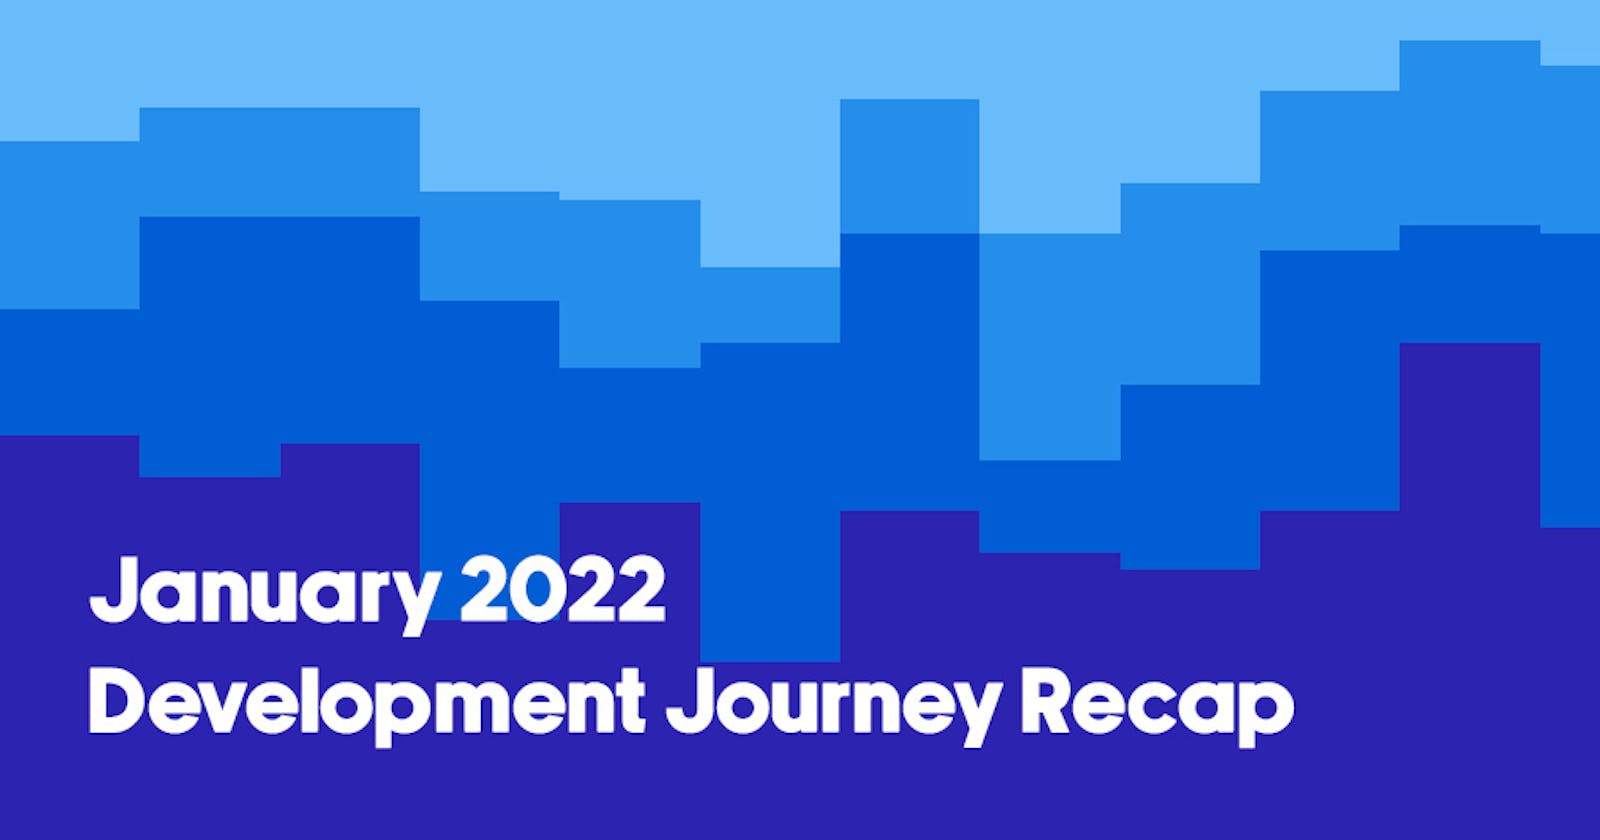 January 2022 Development Journey Recap